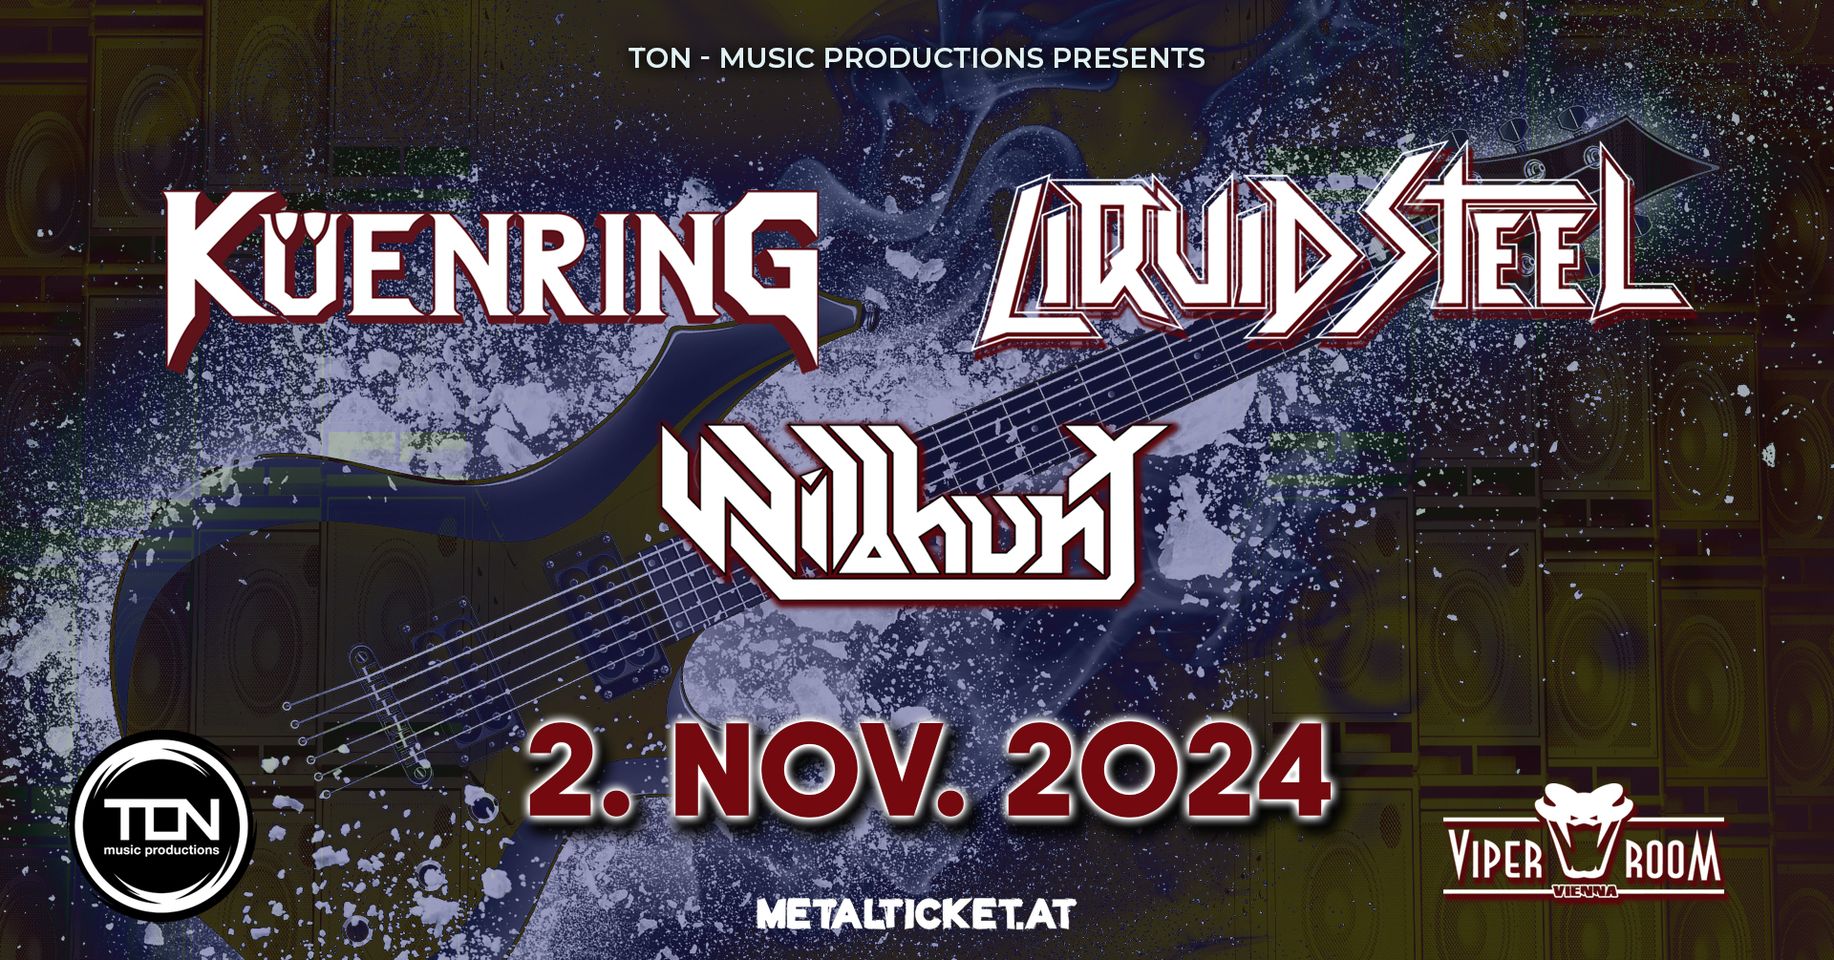 KÜenring - Liquid Steel - Wildhunt am 2. November 2024 @ Viper Room.